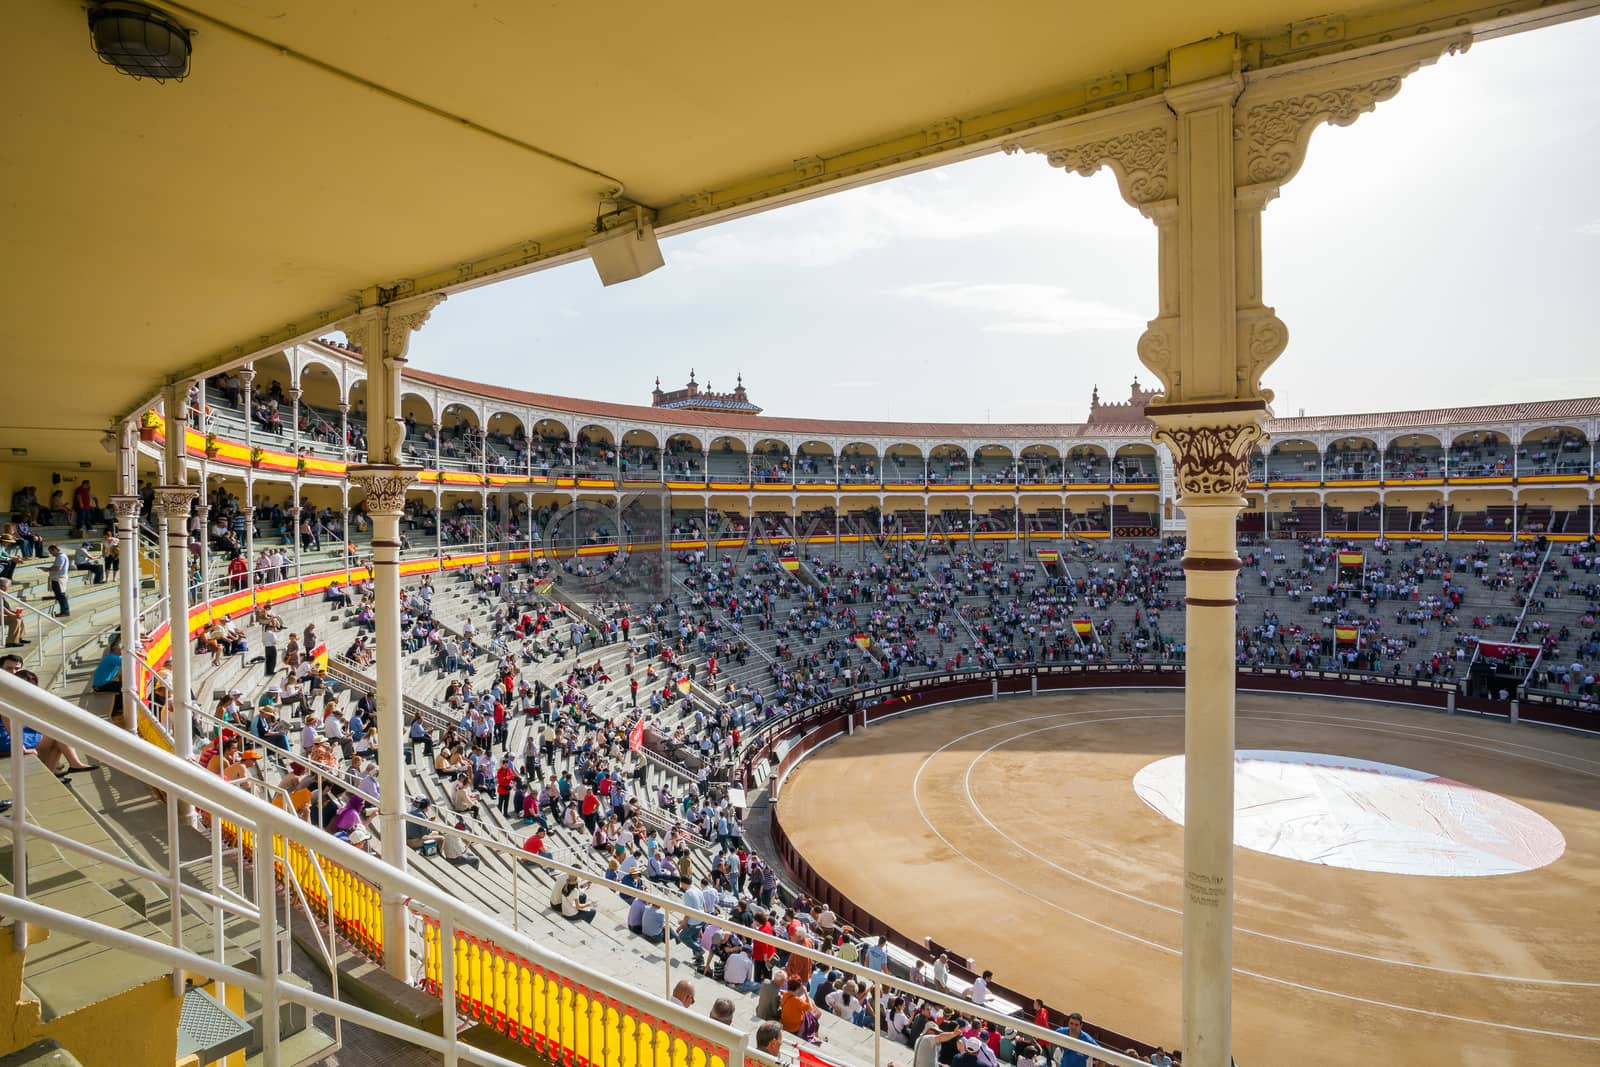 Royalty free image of Plaza de Toros de Las Ventas interior view with tourists gatheri by PixAchi